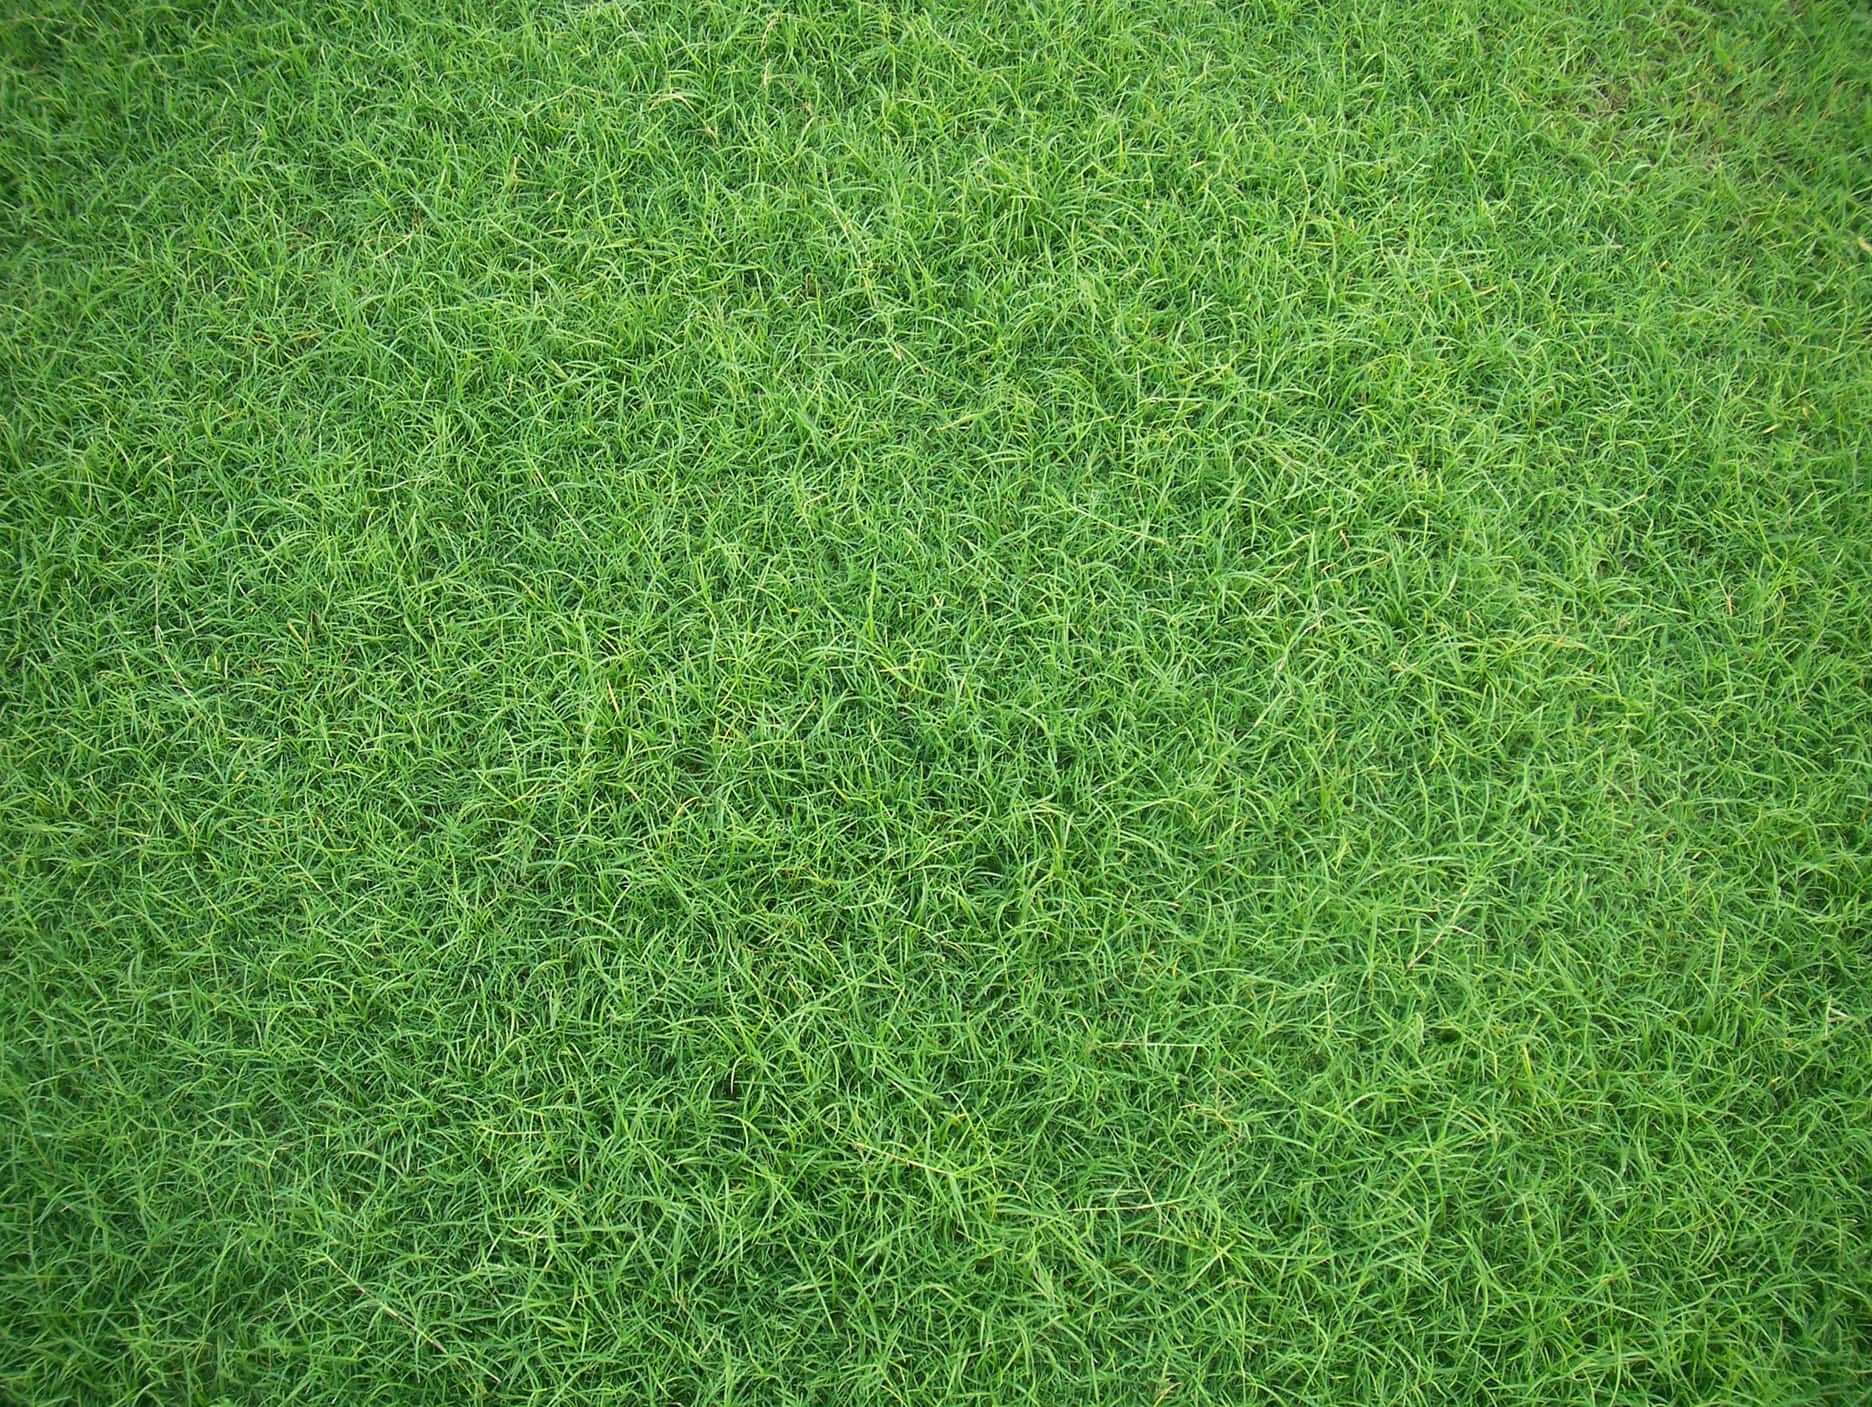 A lush field of vibrant green grass